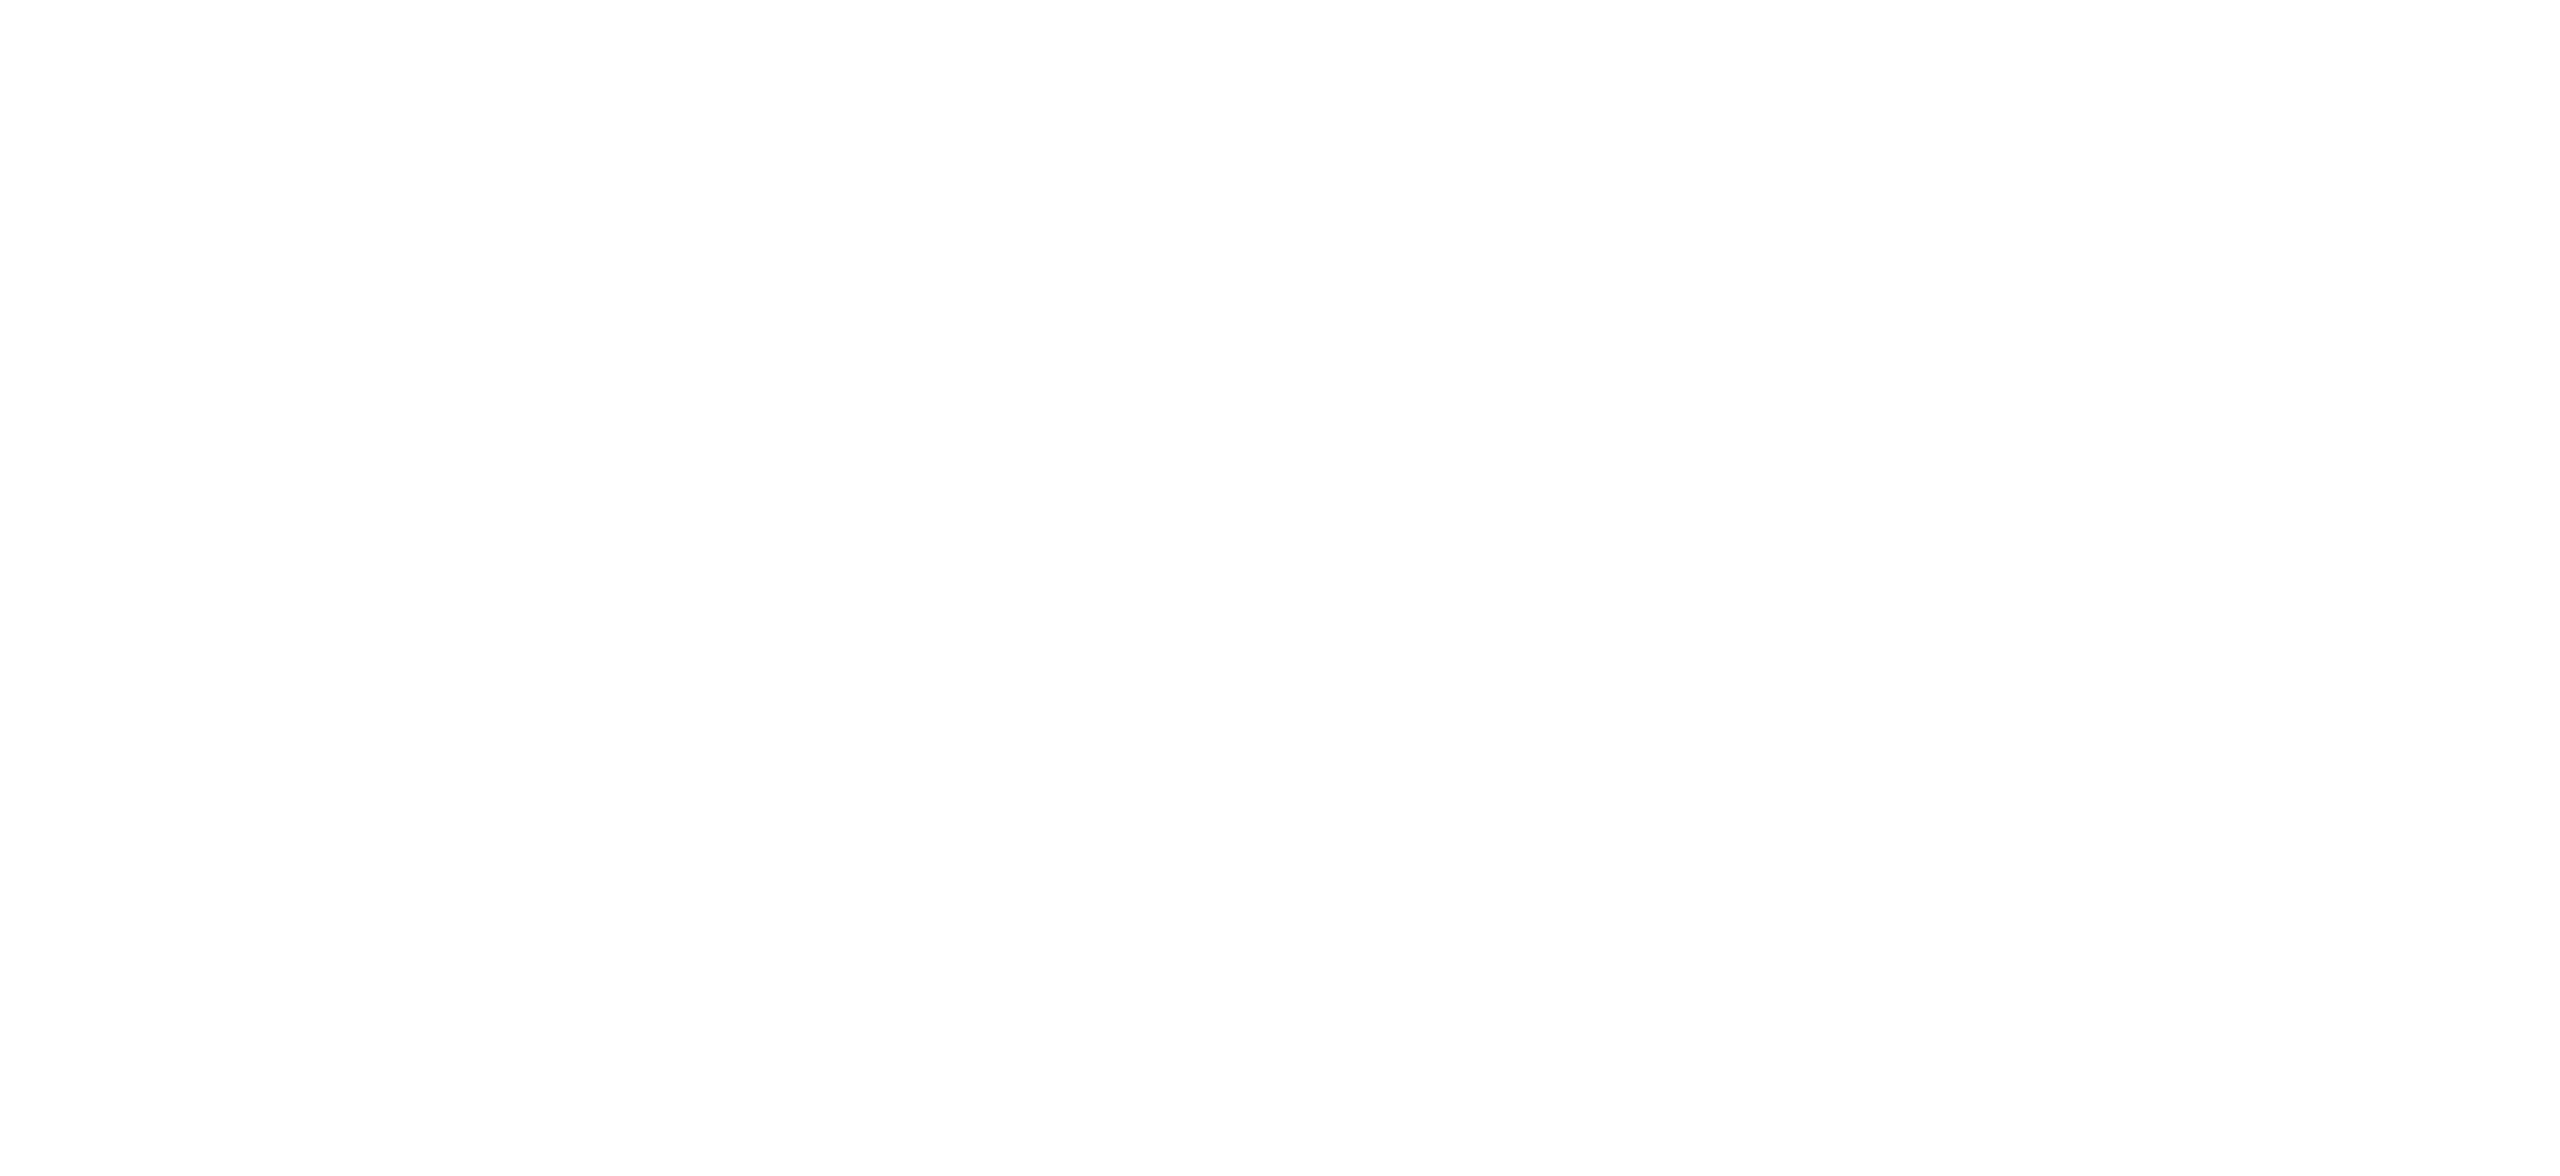 His Majesty's Treasury